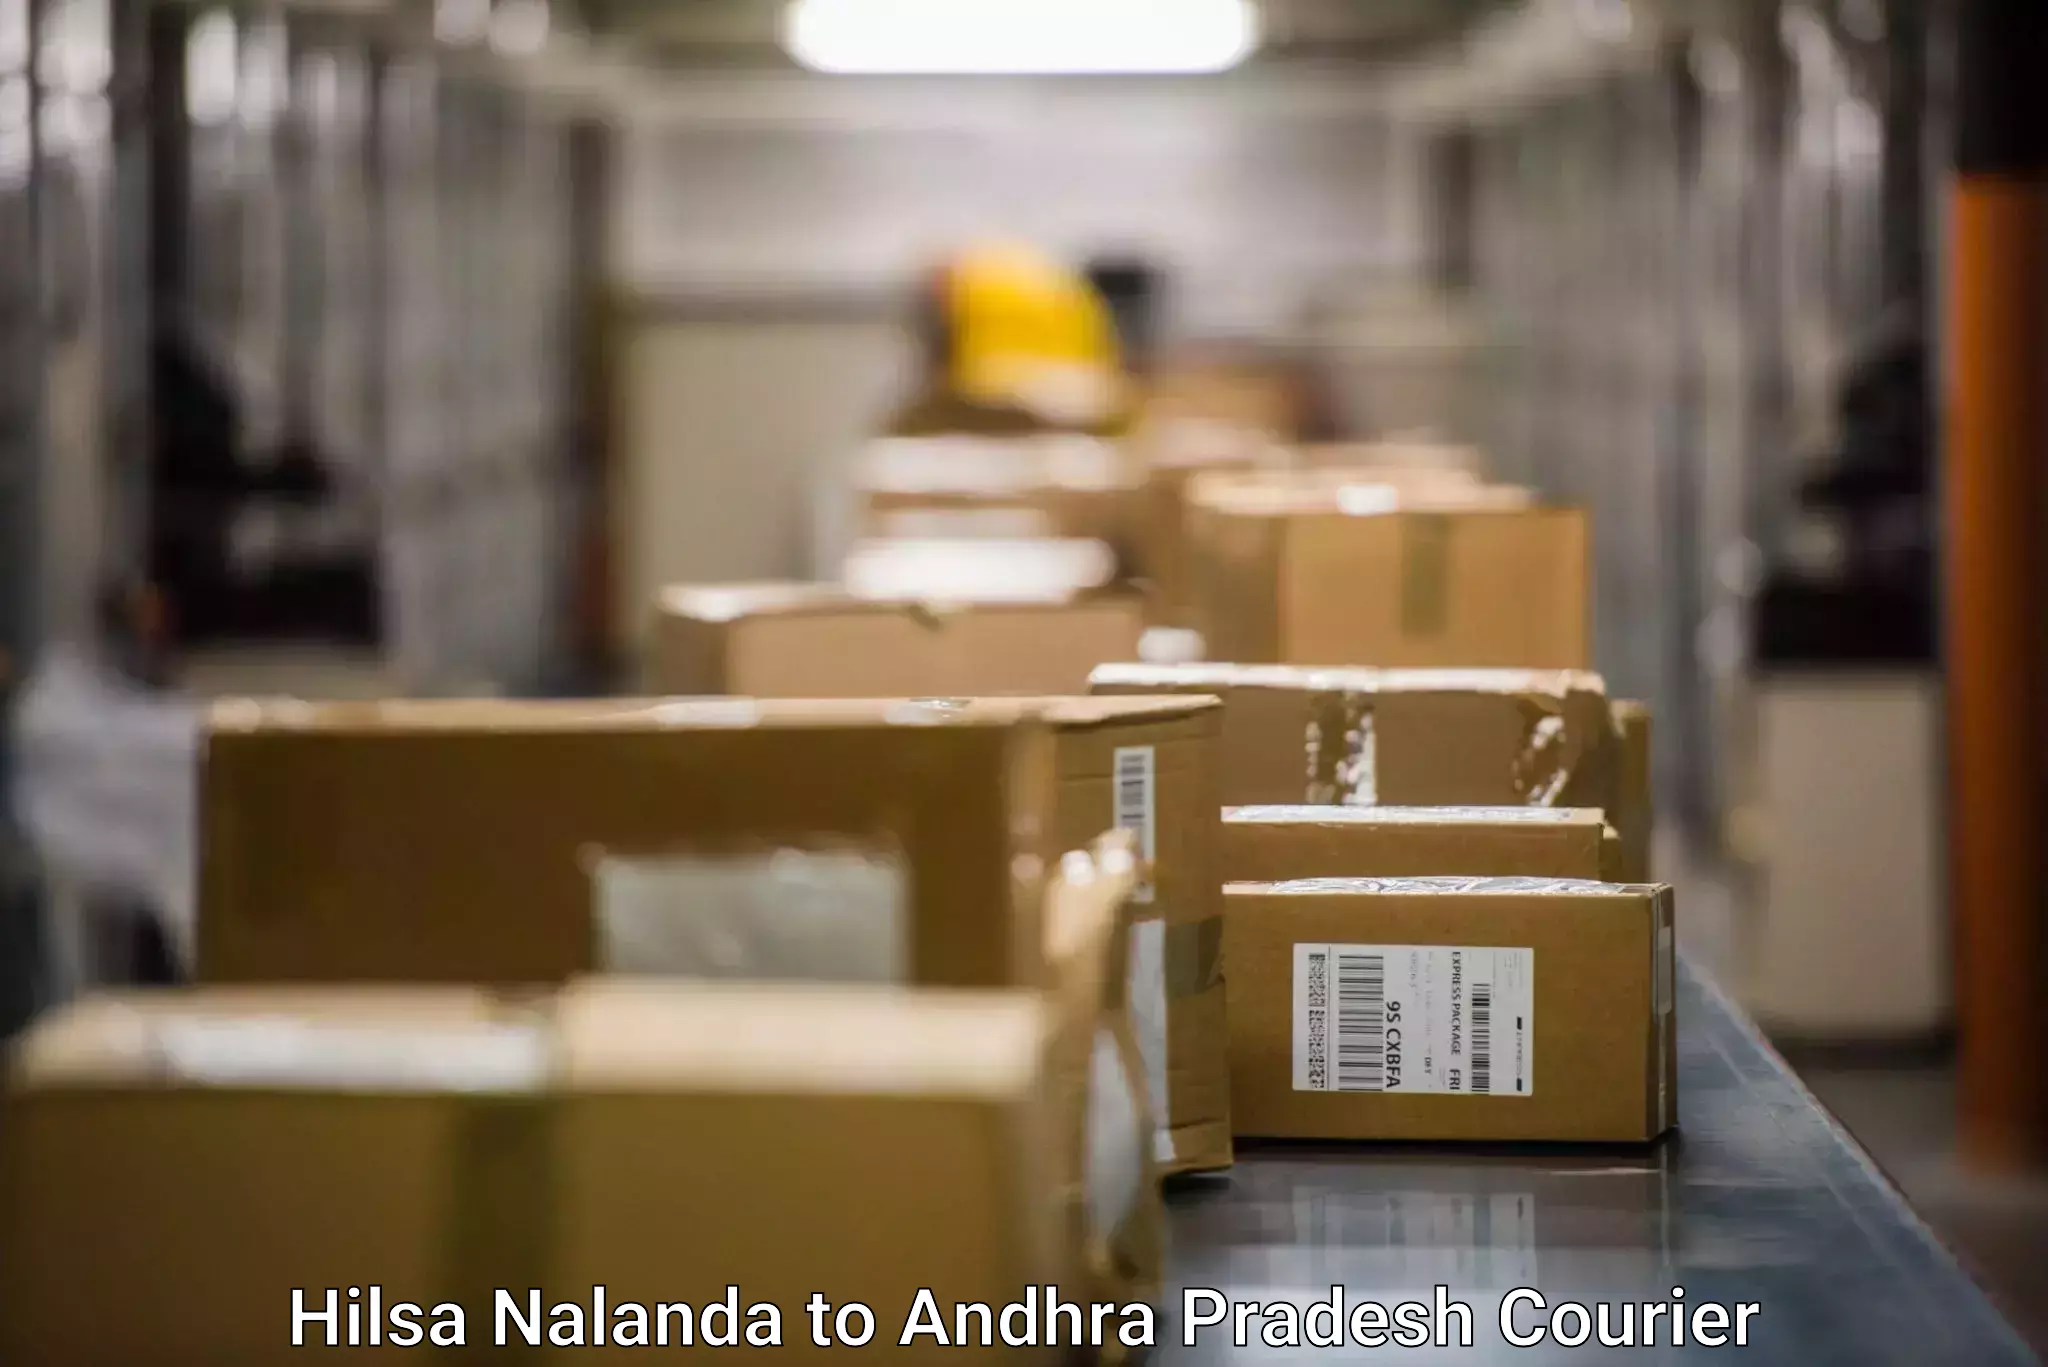 Modern courier technology Hilsa Nalanda to Tripuranthakam